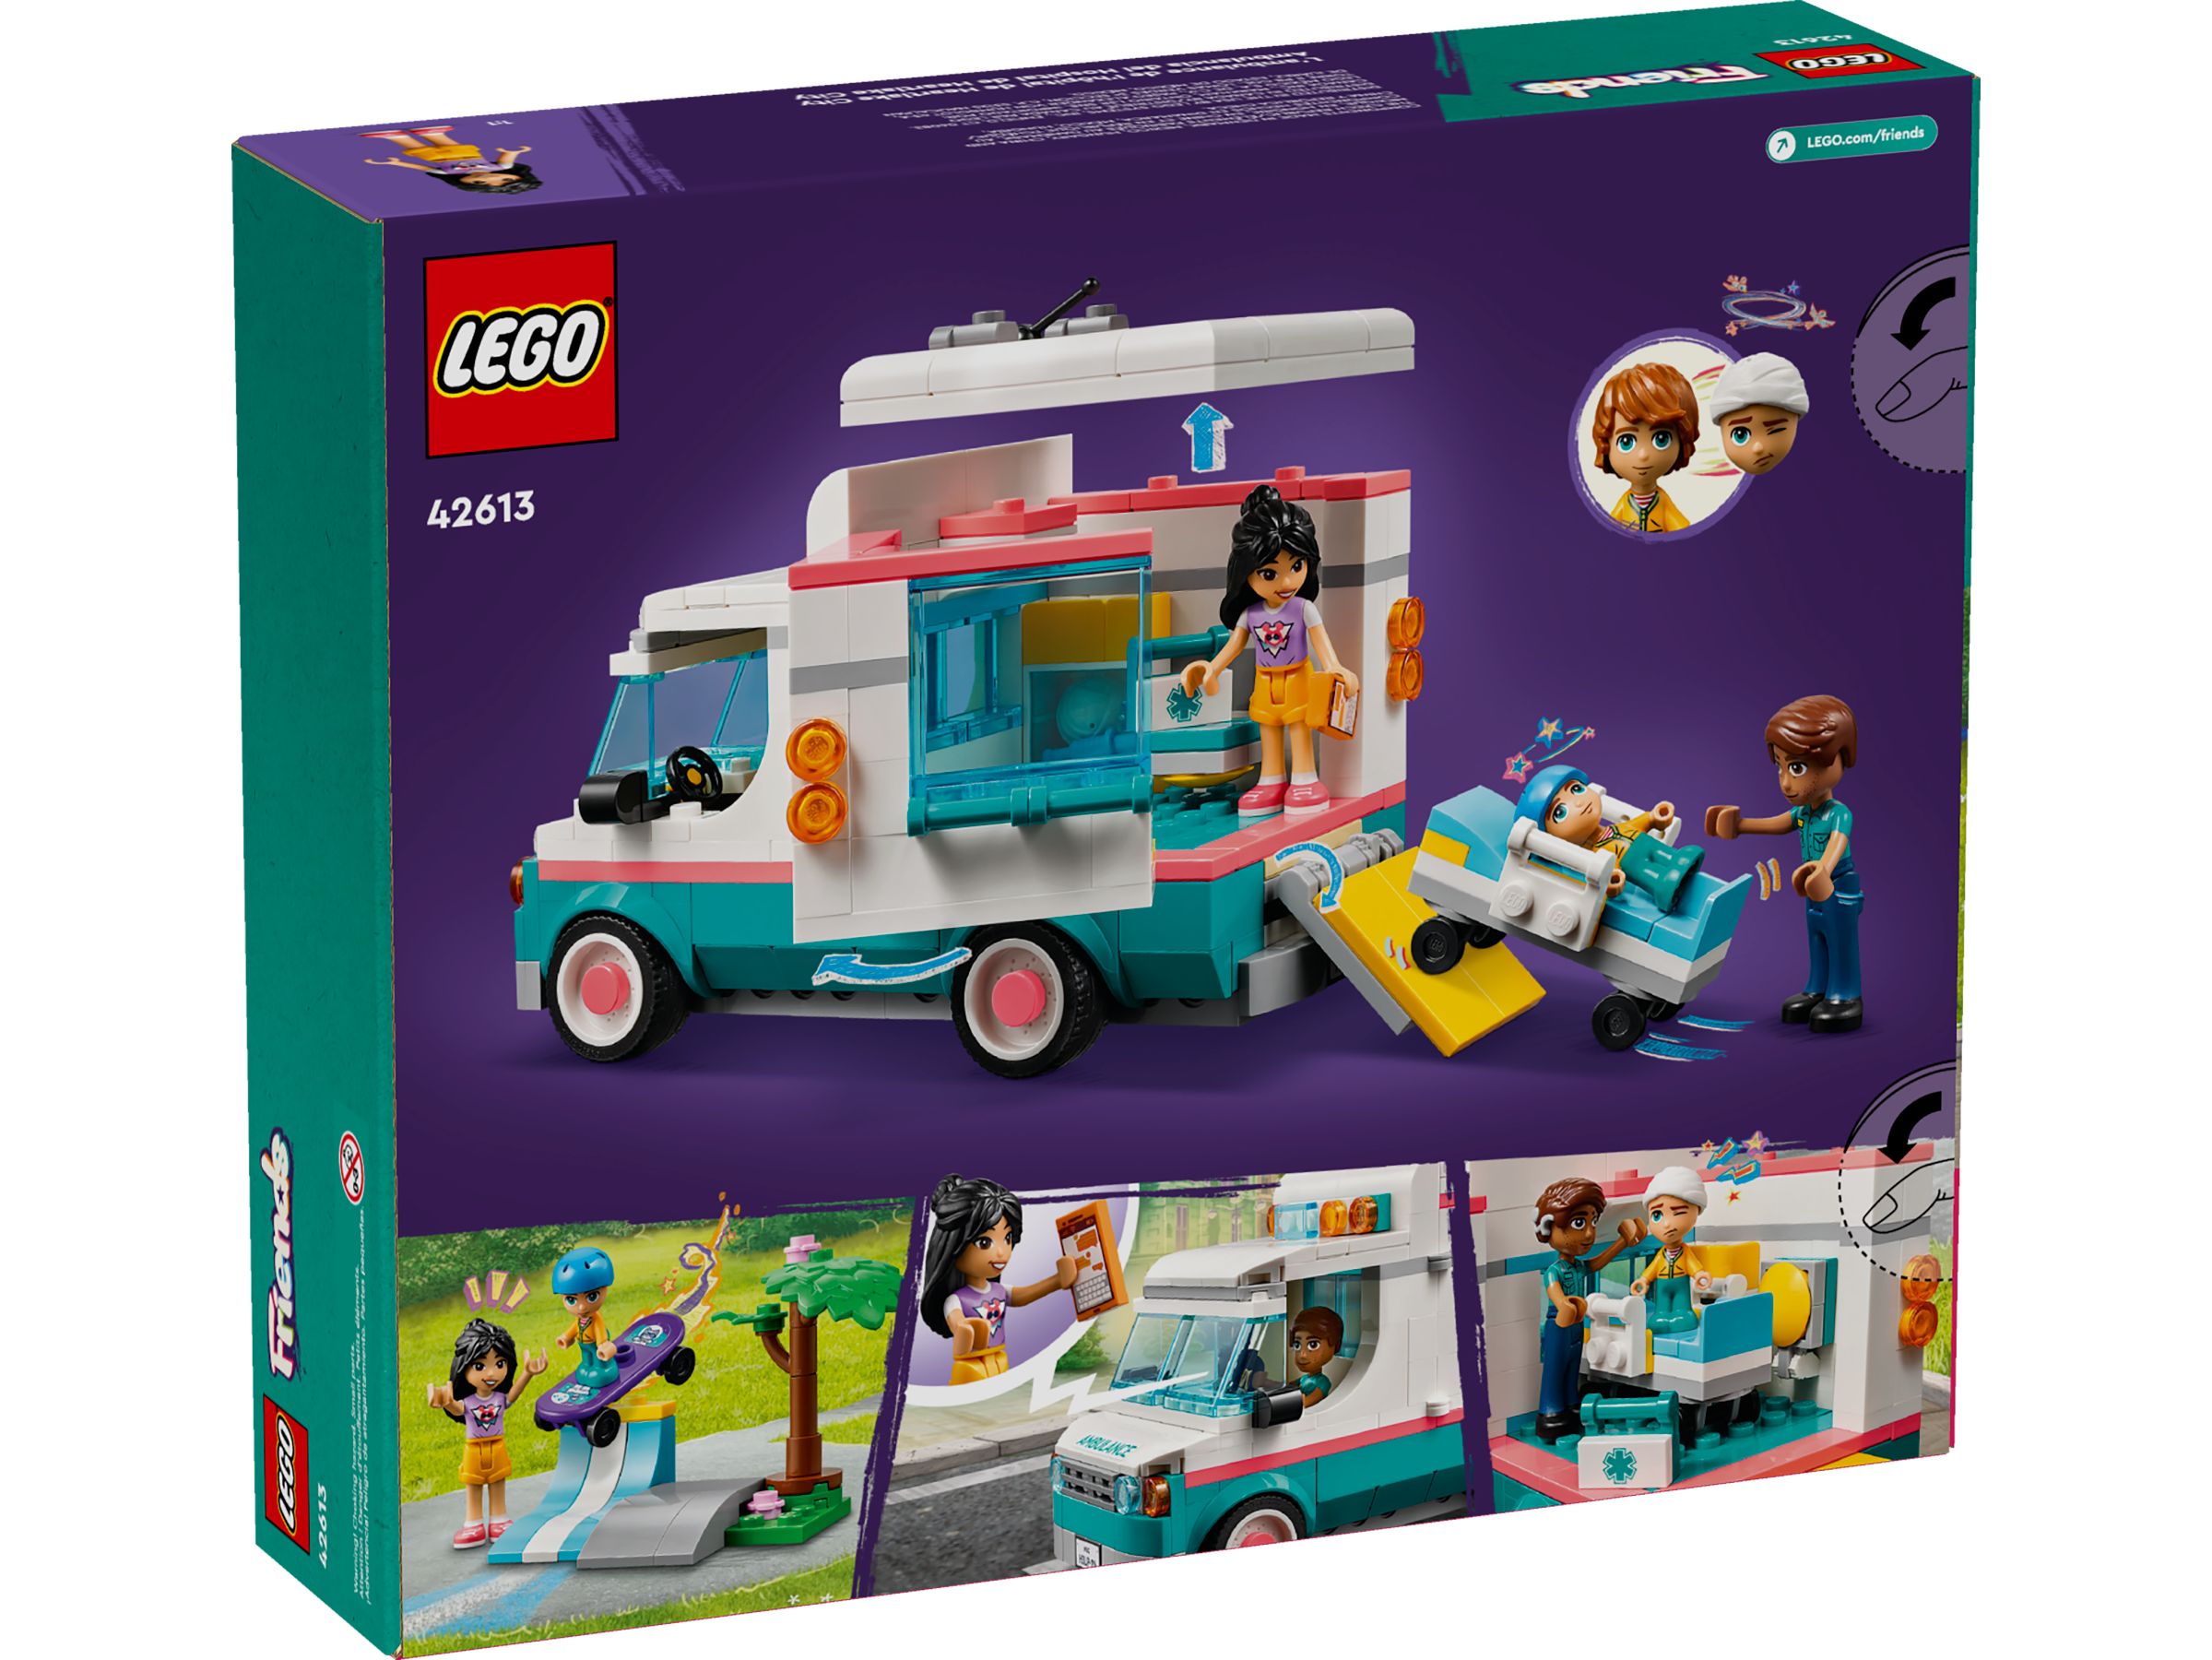 LEGO Friends 42613 Heartlake City Rettungswagen LEGO_42613_Box5_v39.jpg